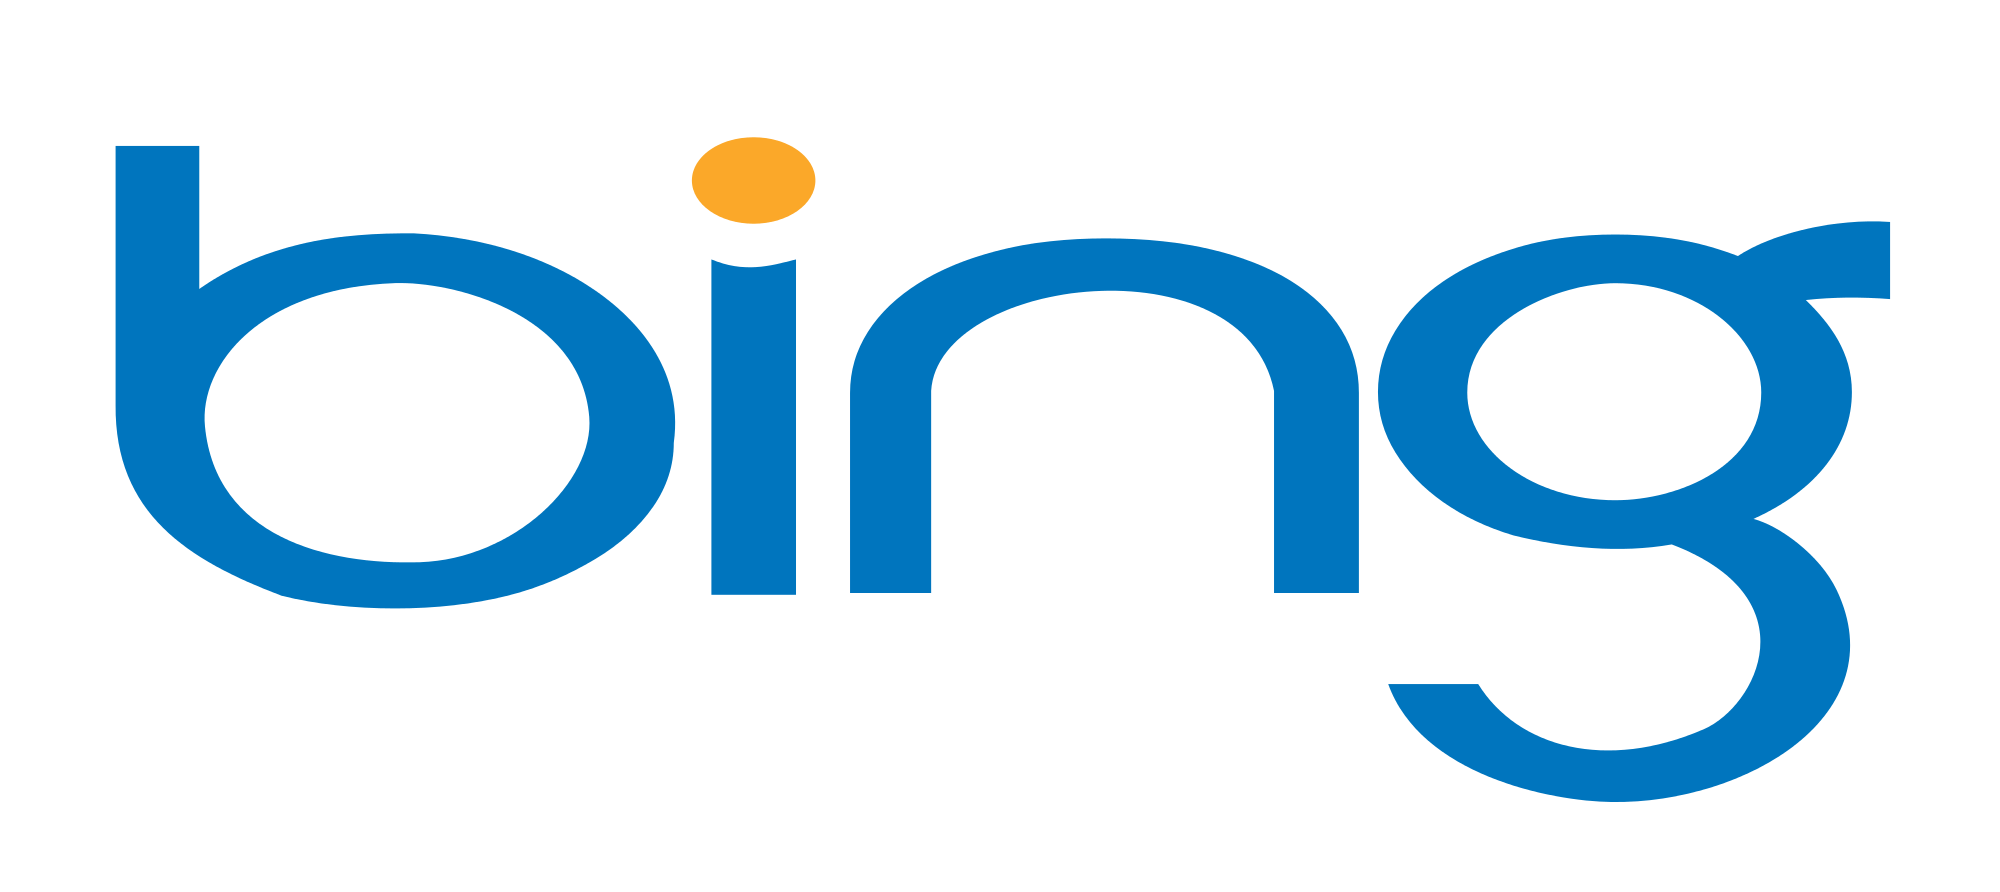 Bing Logo - File:Bing logo.svg - Wikimedia Commons